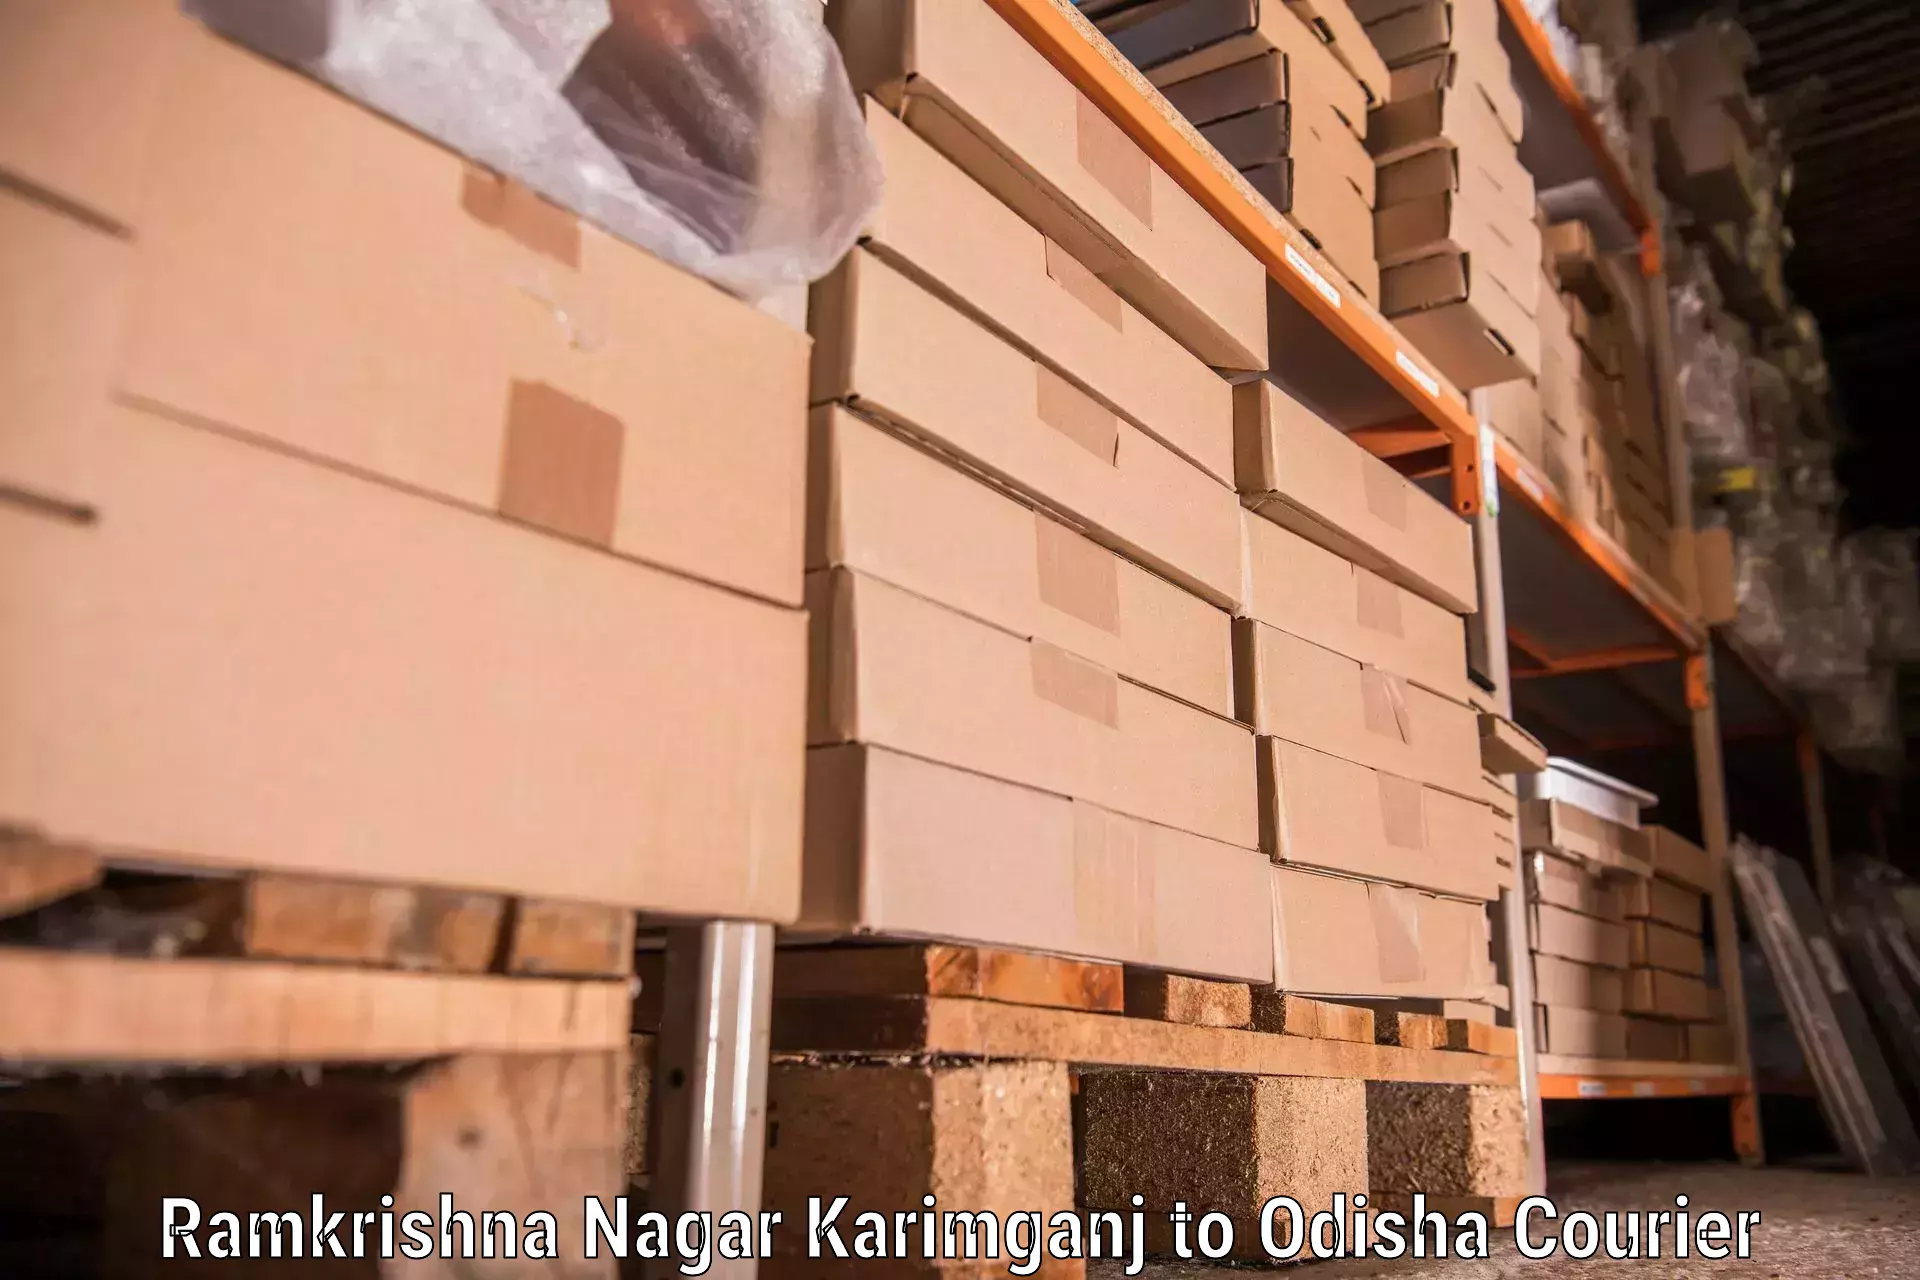 Professional movers and packers Ramkrishna Nagar Karimganj to Garjanpur